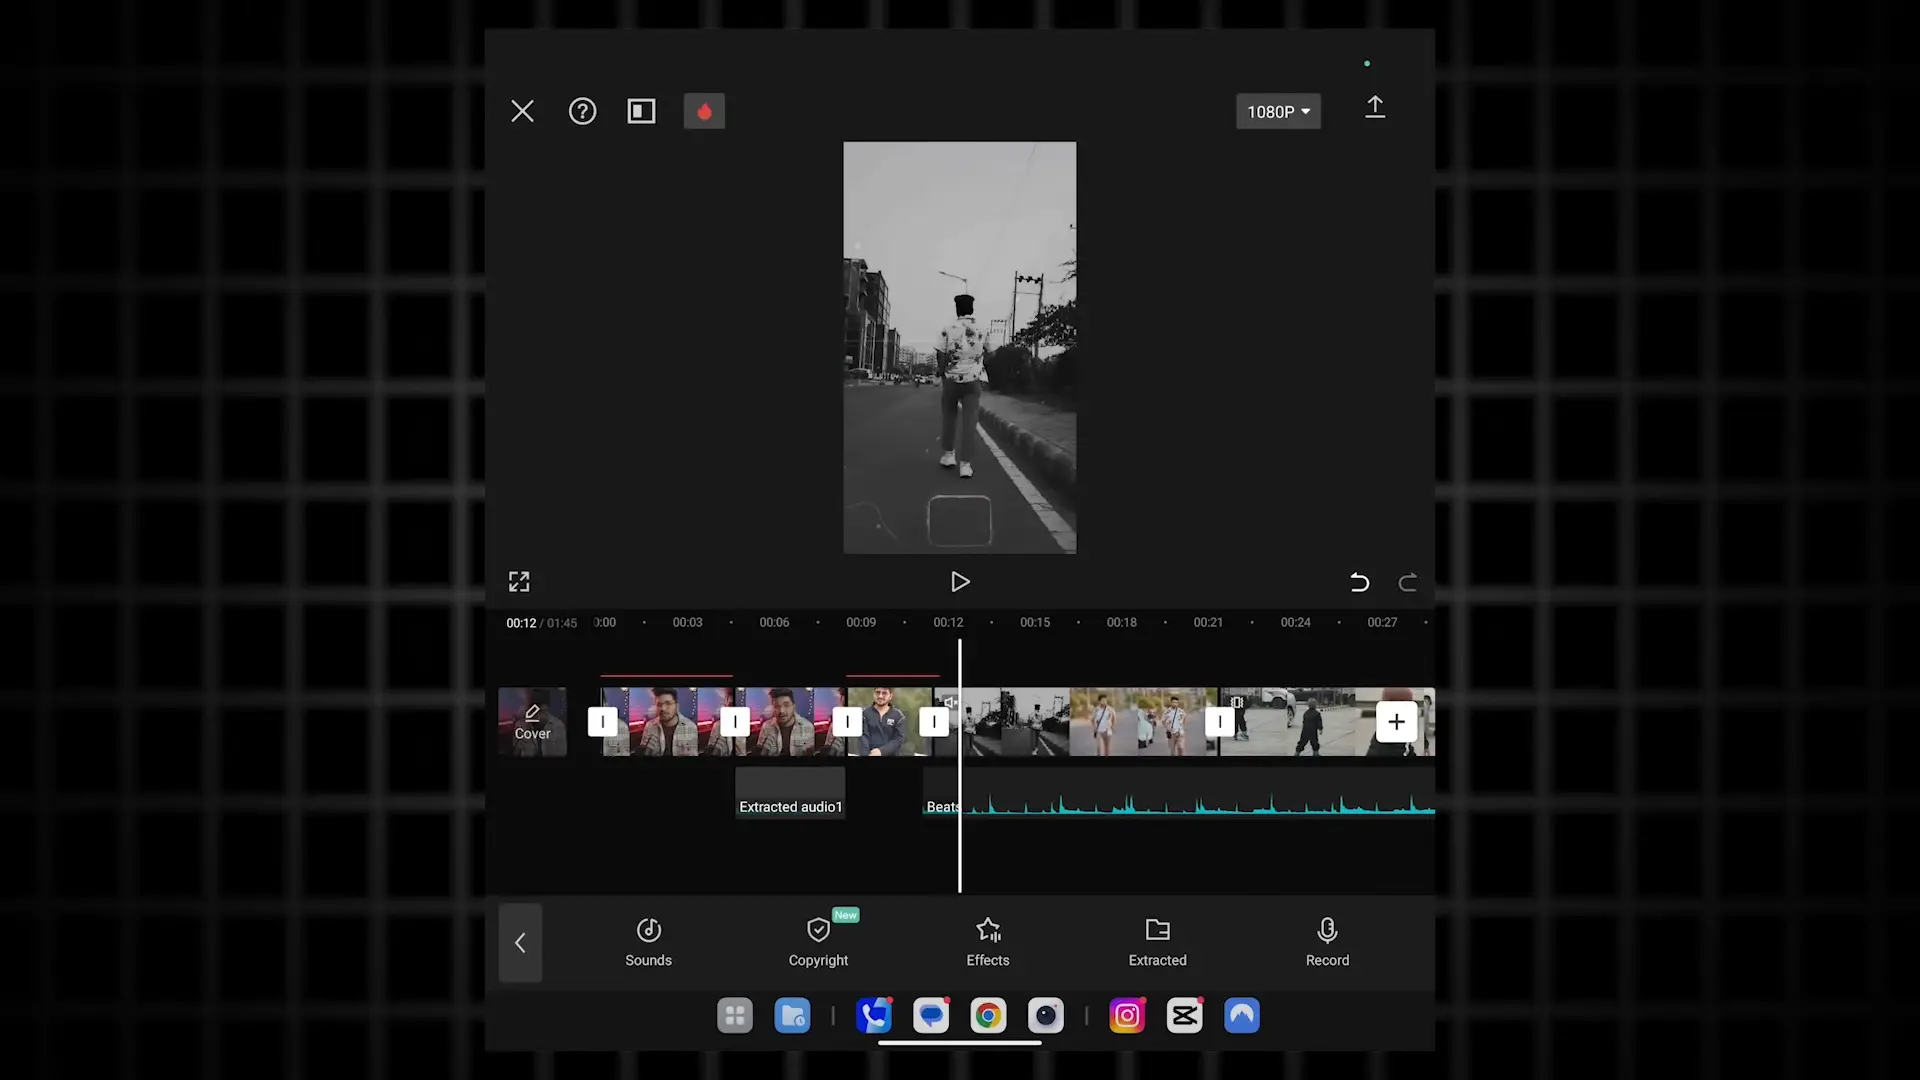 Capcut Video editing masterclass in Hindi NSB Pictures 17 5 screenshot